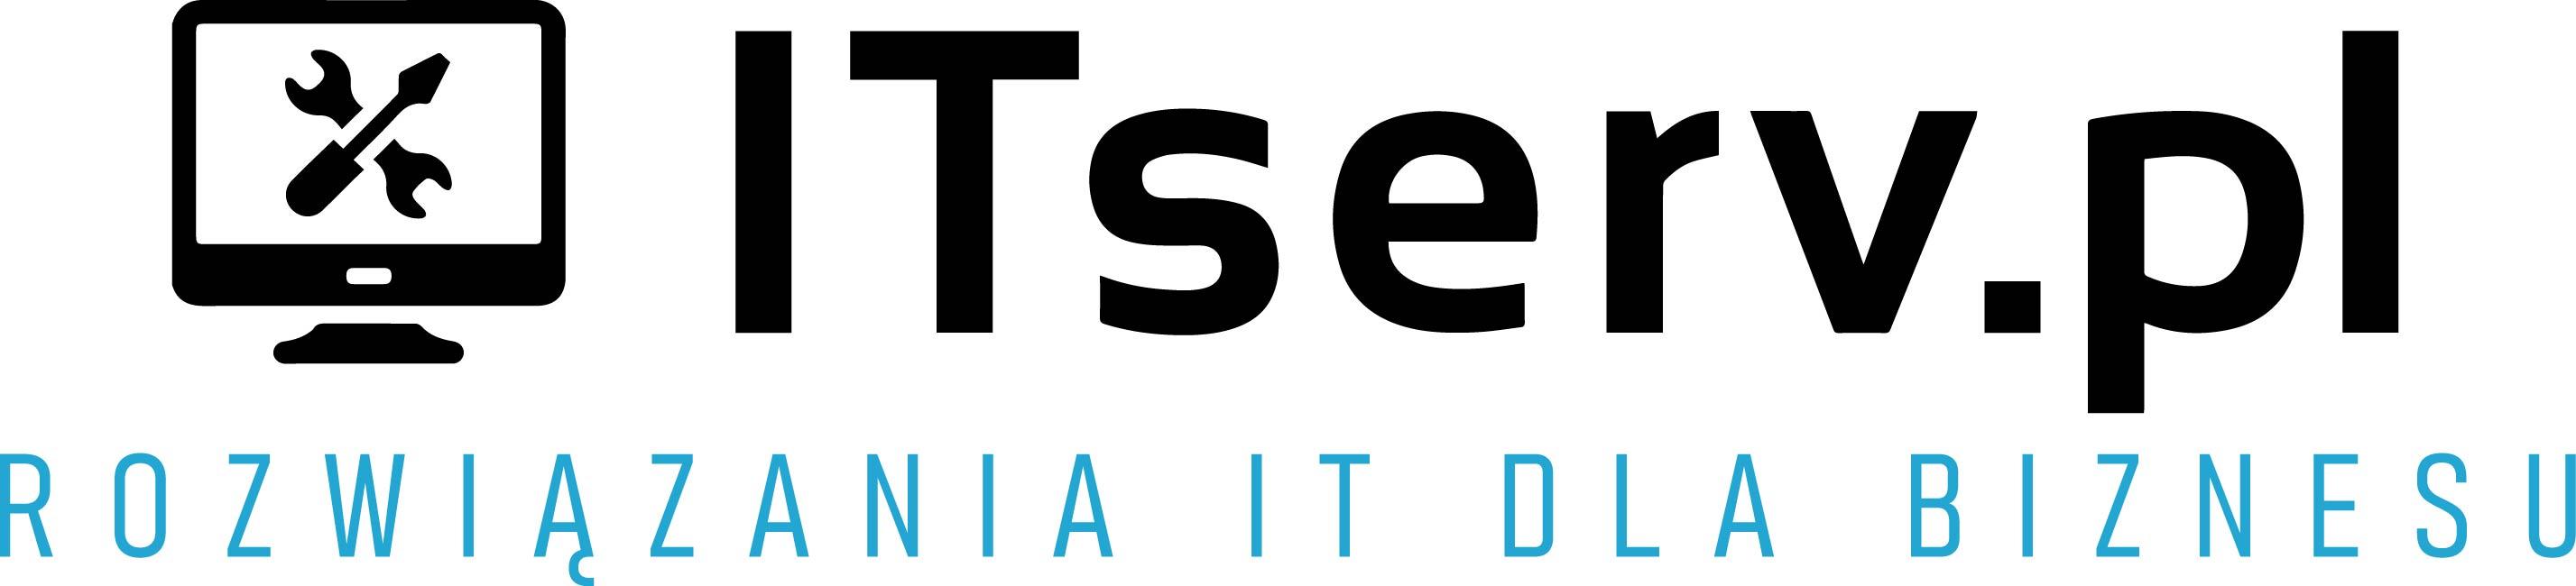 ITserv MARCIN PORĘBA-logo